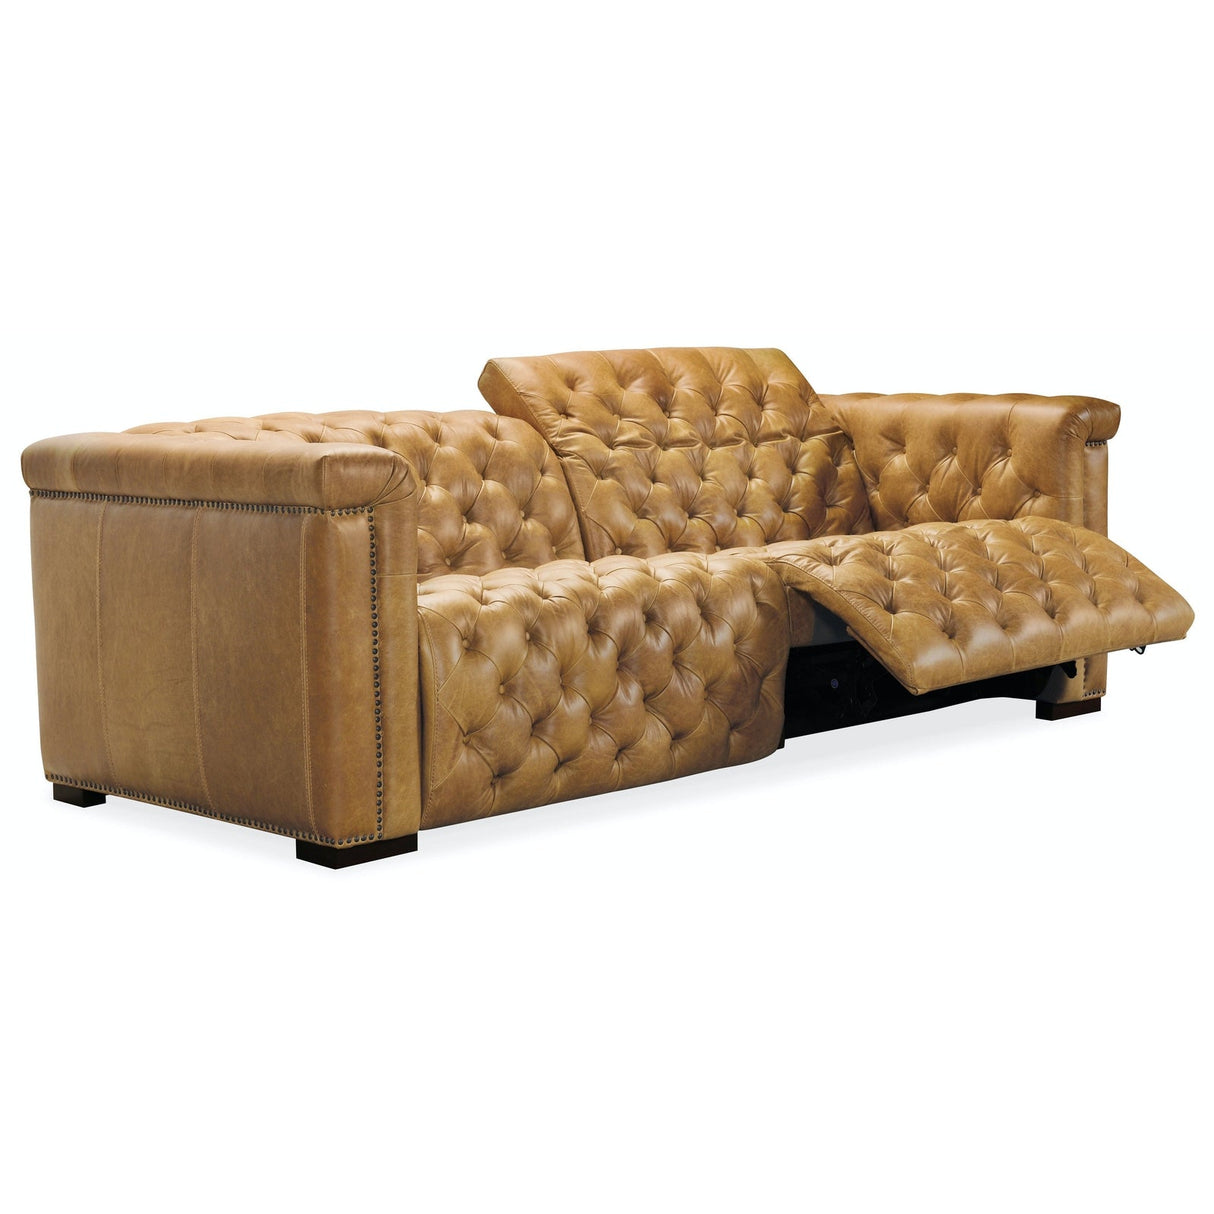 Hooker Furniture Savion 1.5 LAF/RAF 2 over 2 Sofa w/ PWR Rec PWR HR